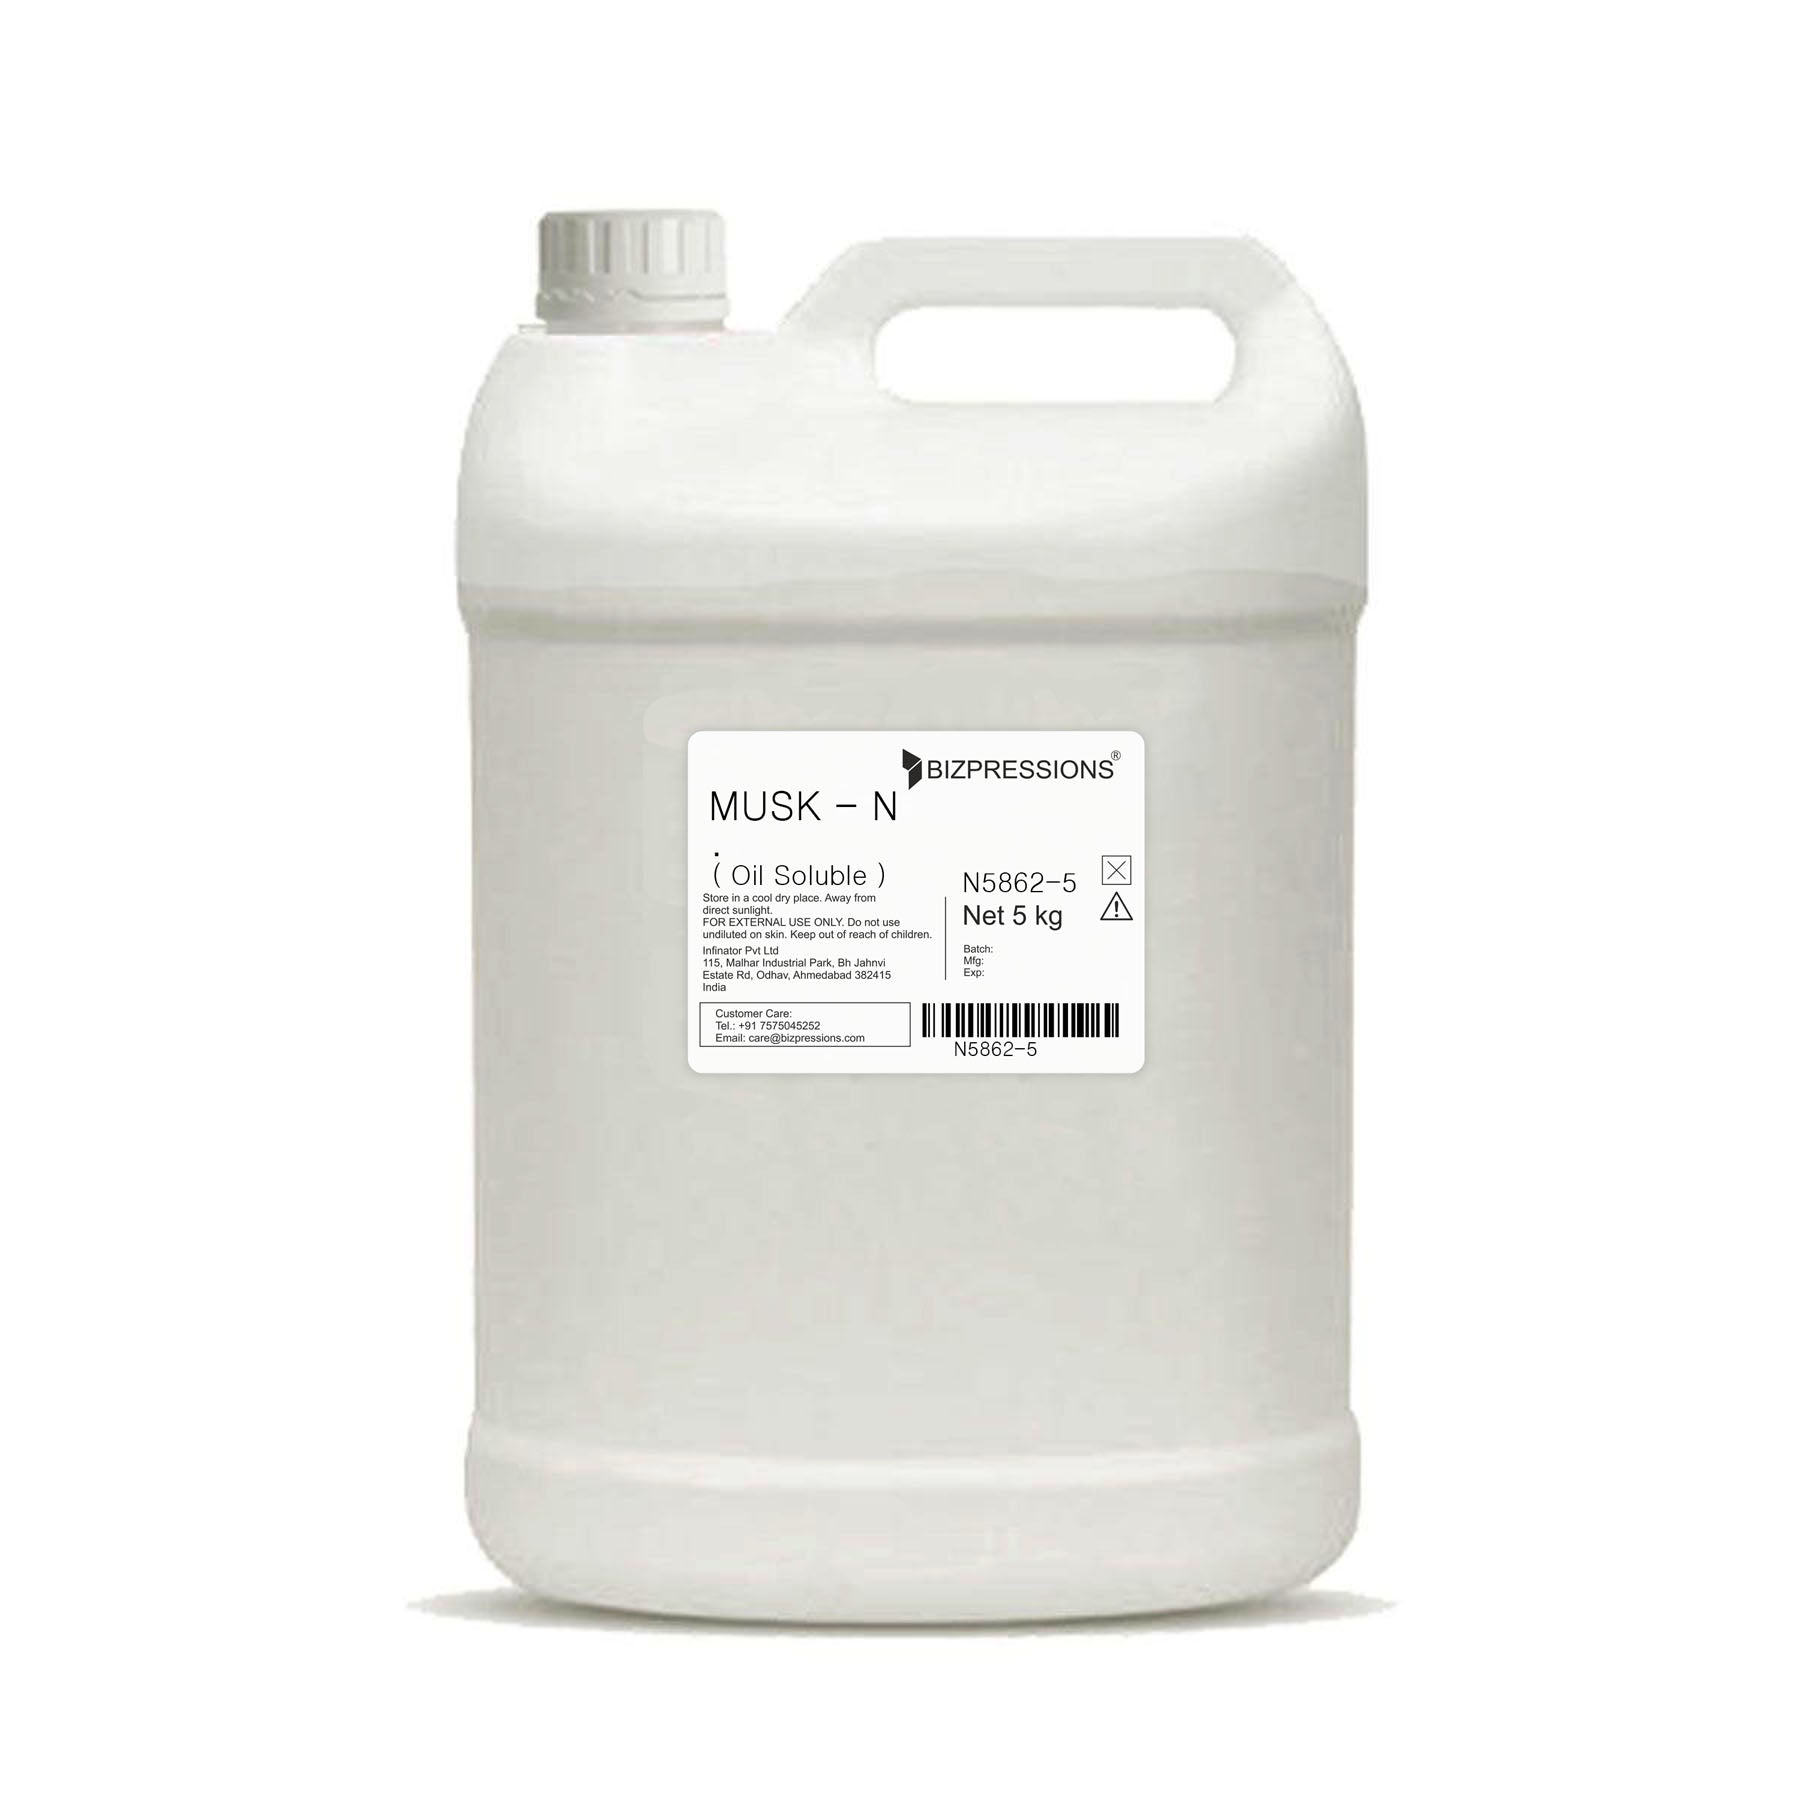 MUSK - N - Fragrance ( Oil Soluble ) - 5 kg